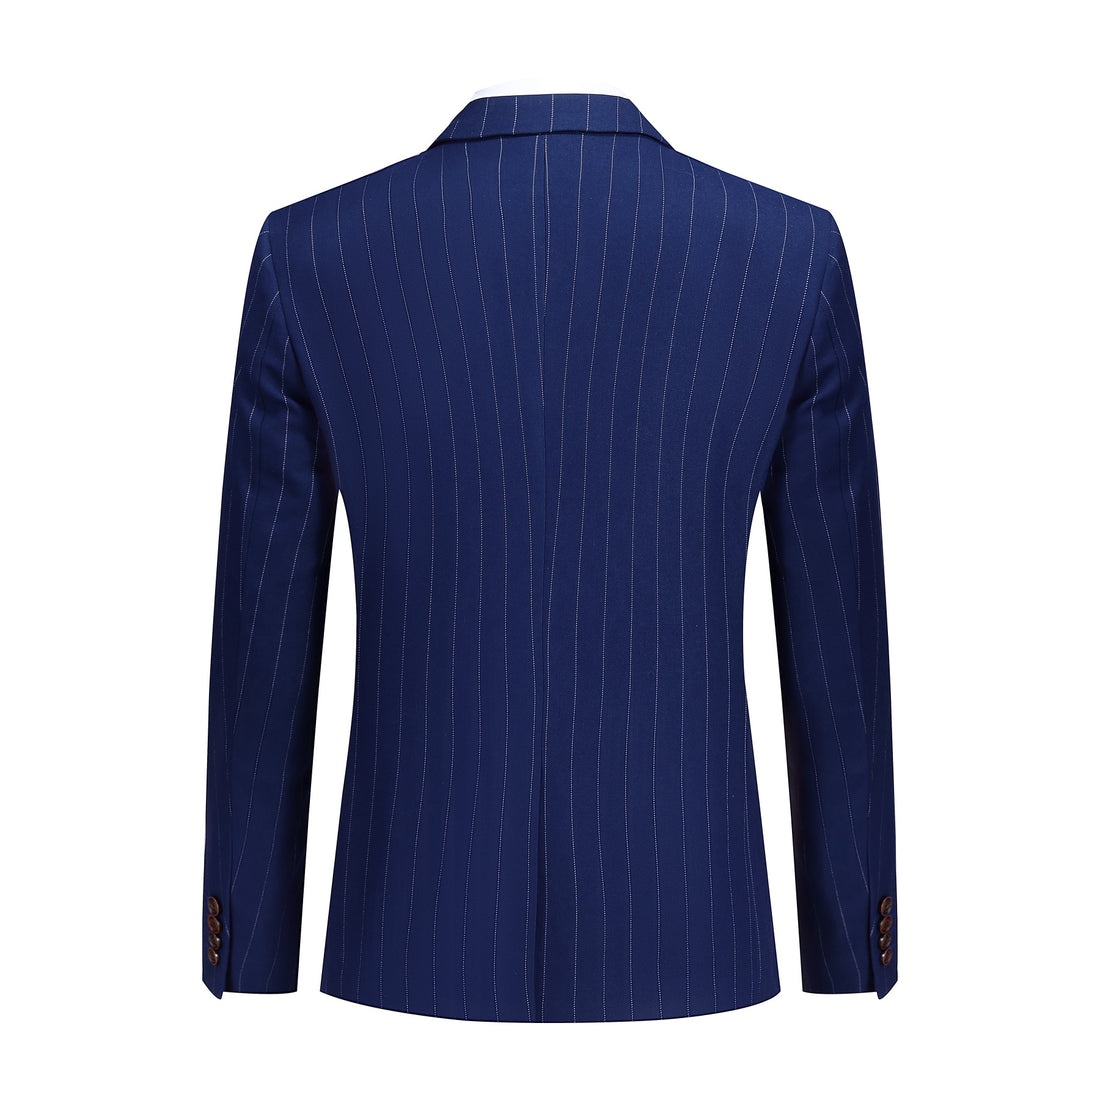 3-Piece Blue Suit Stripe Design Suit